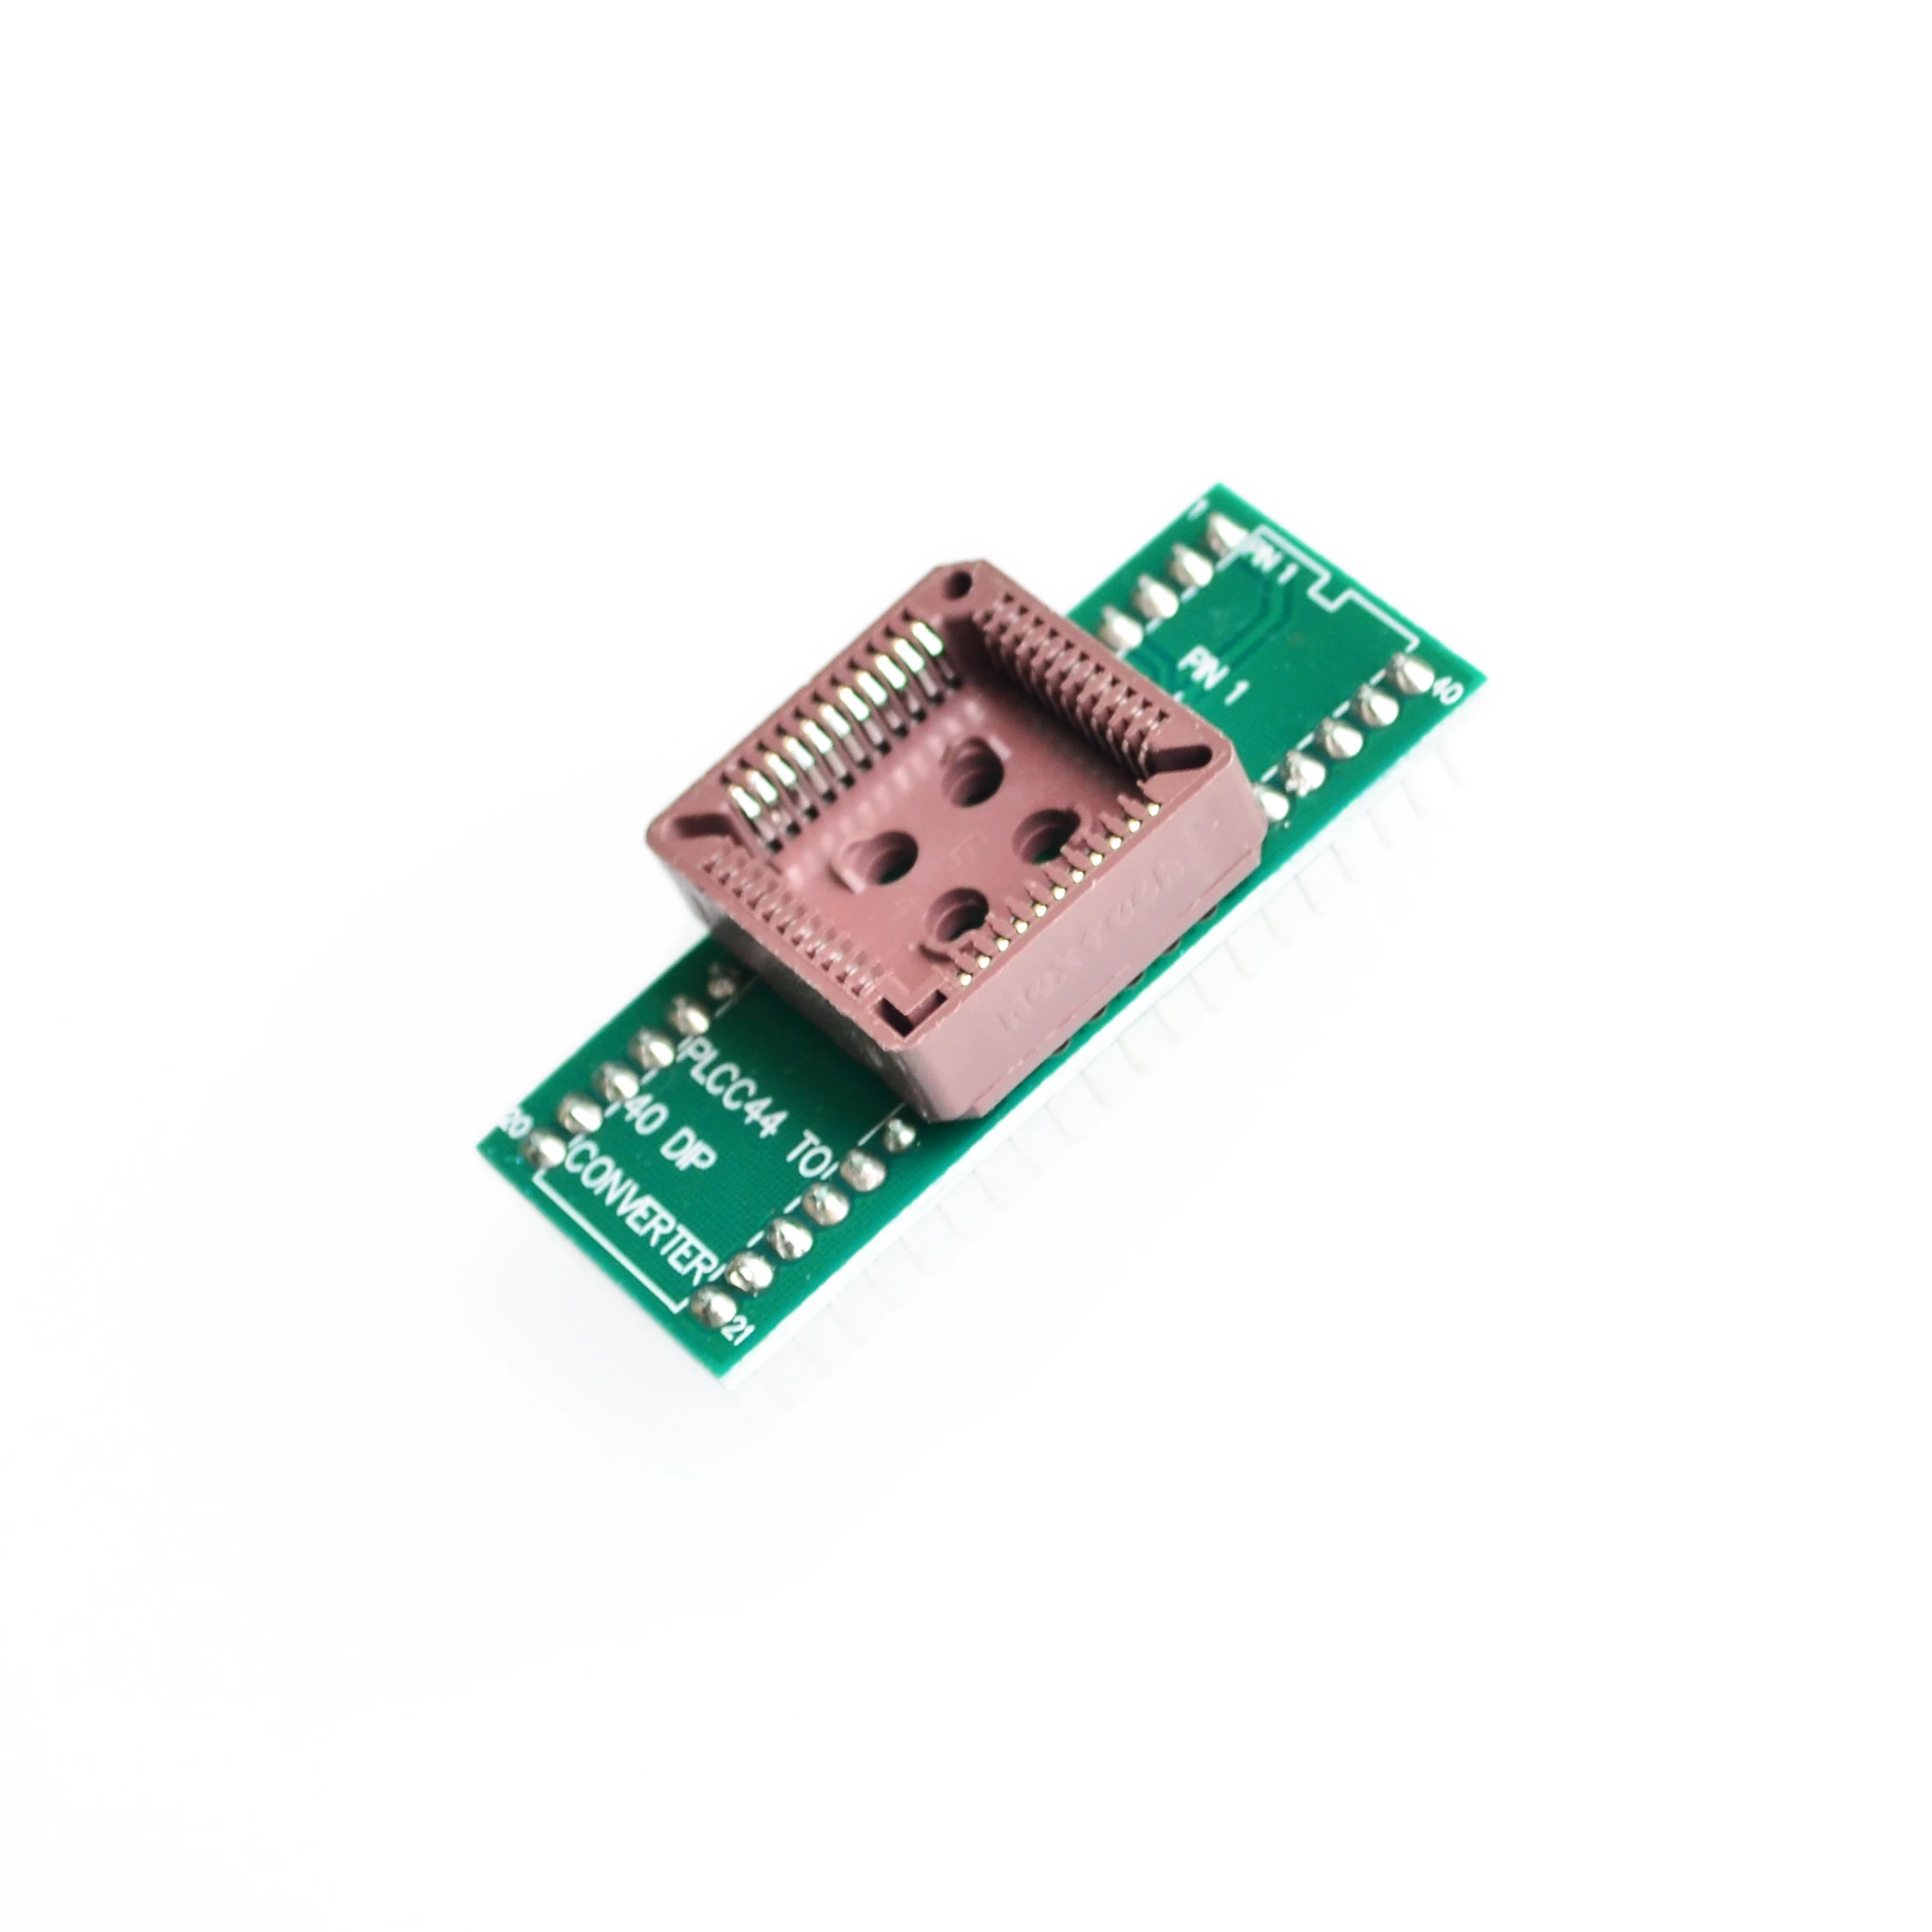 PLCC44 to DIP40 EZ Programmer Adapter Socket Universal Converter